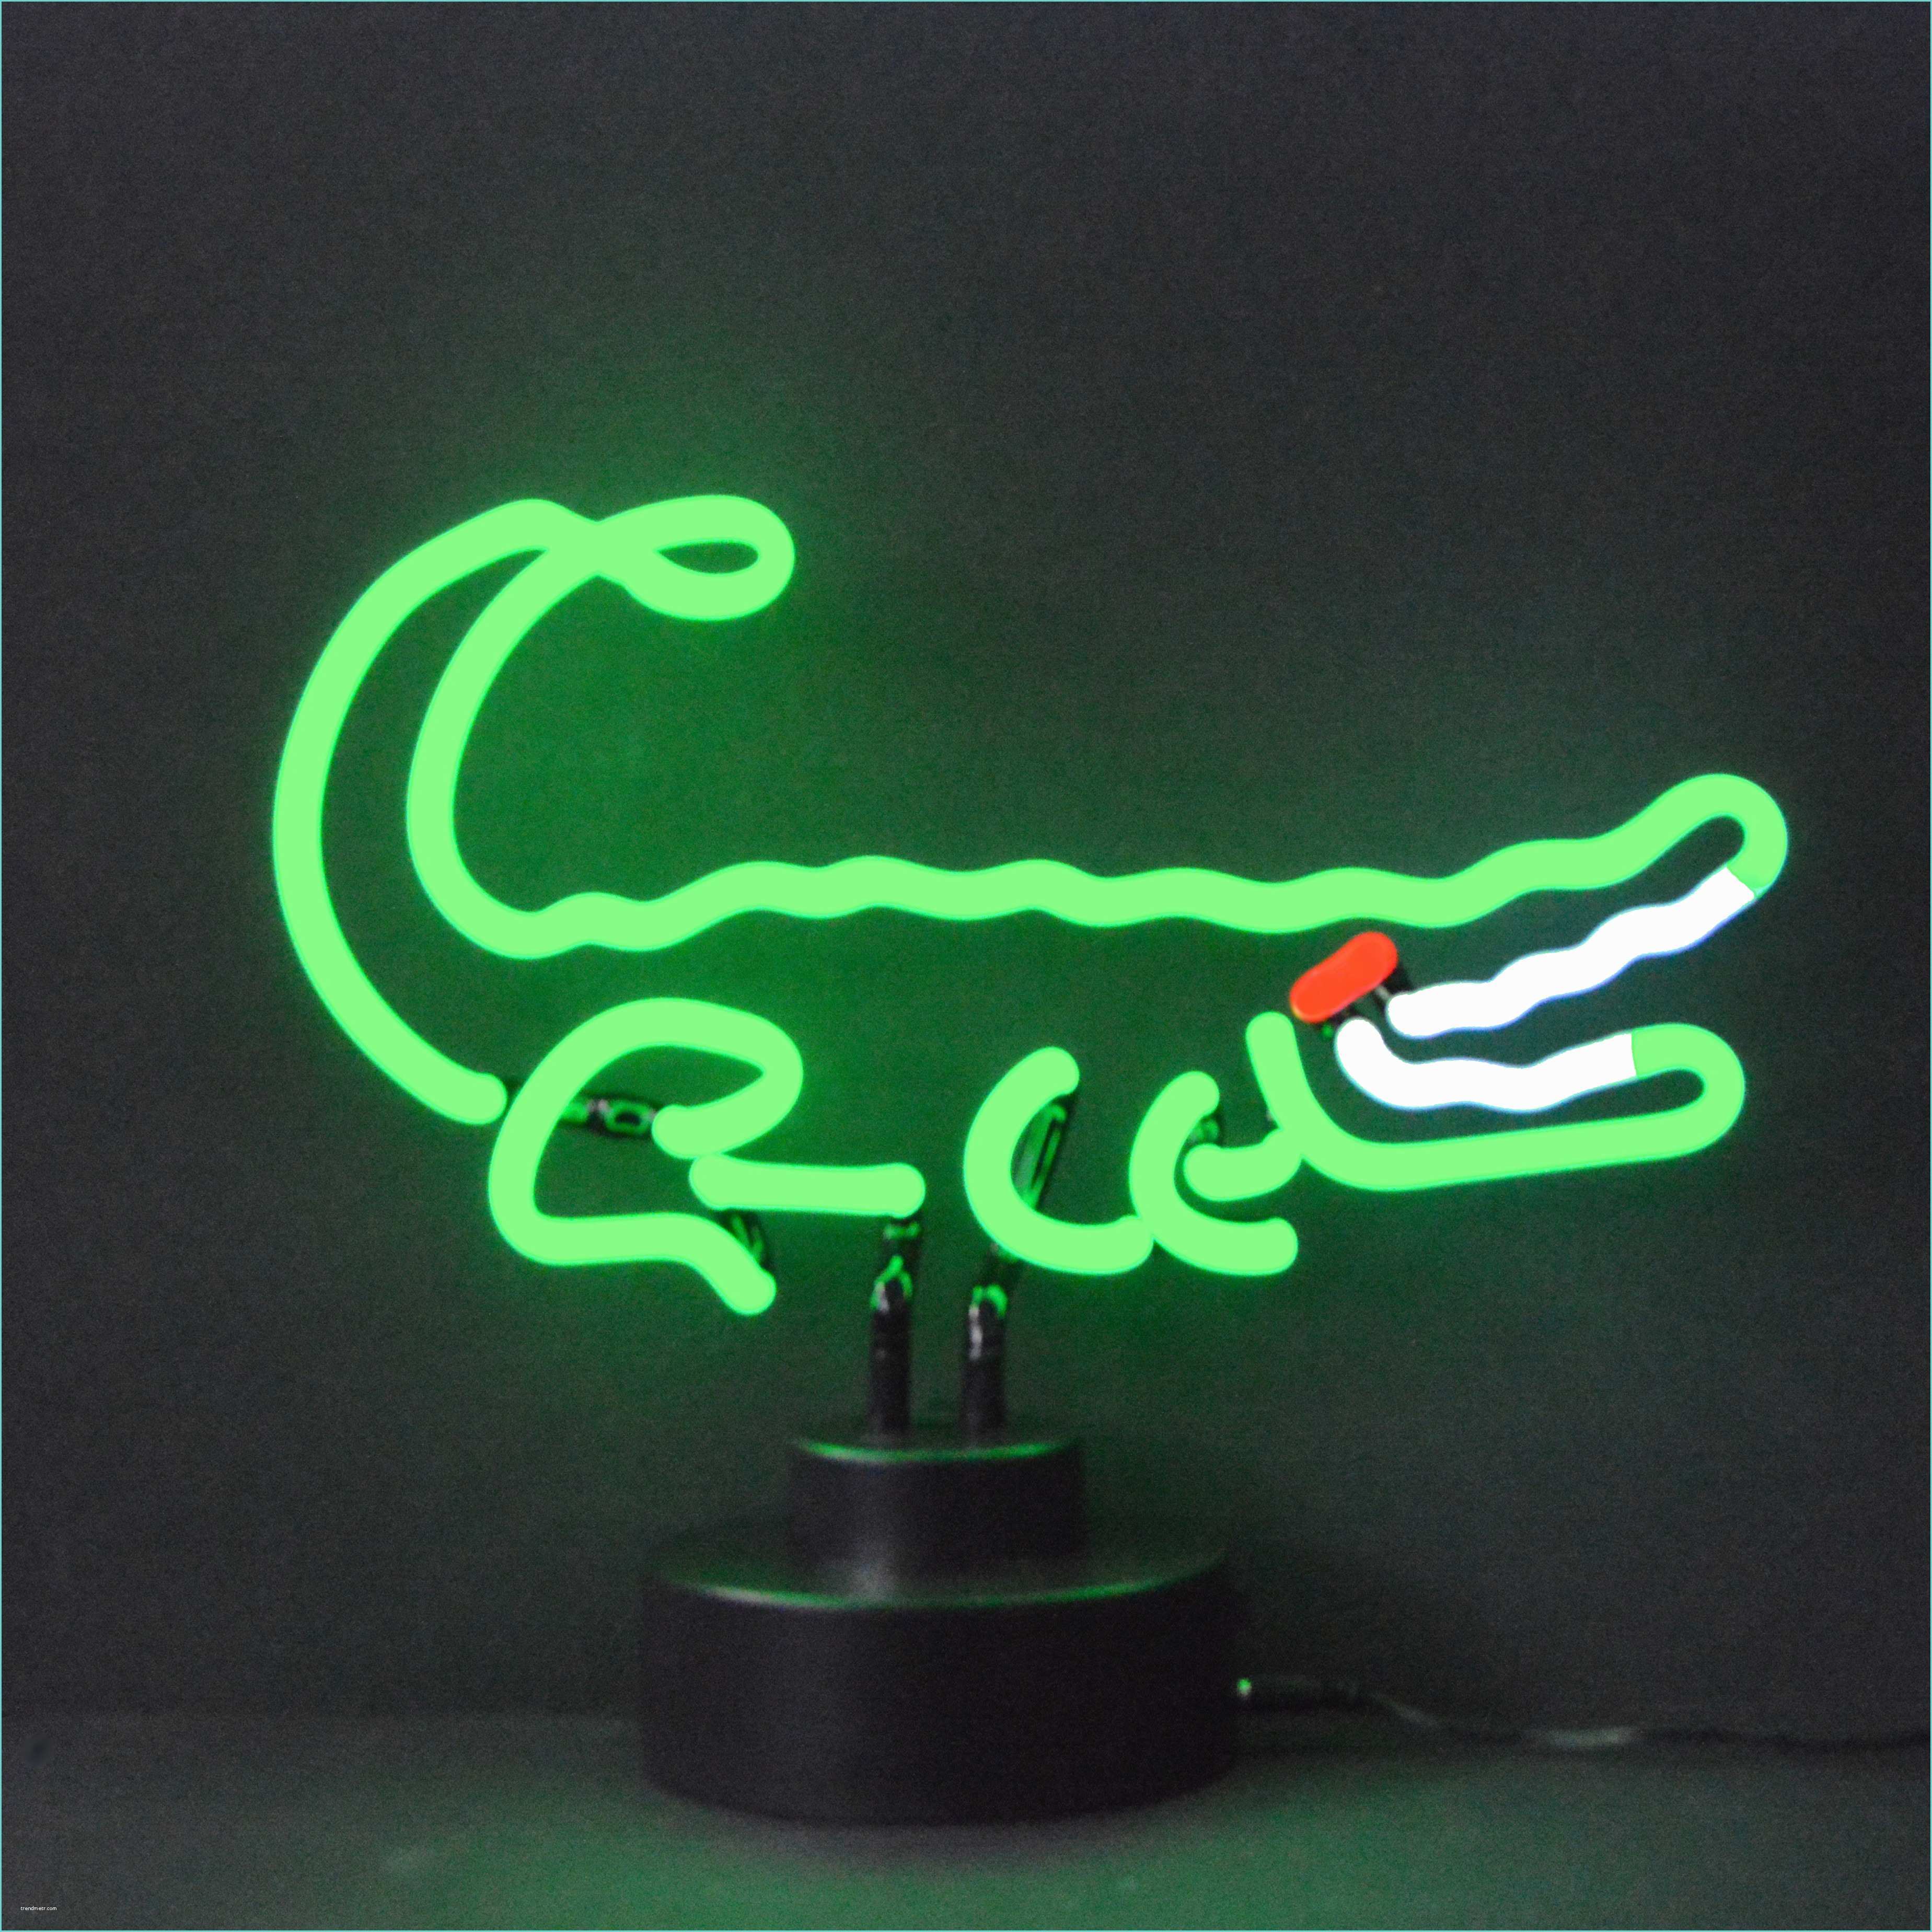 Neon Light Signs Warrington Neonetics Business Signs Crocodile Neon Sign & Reviews